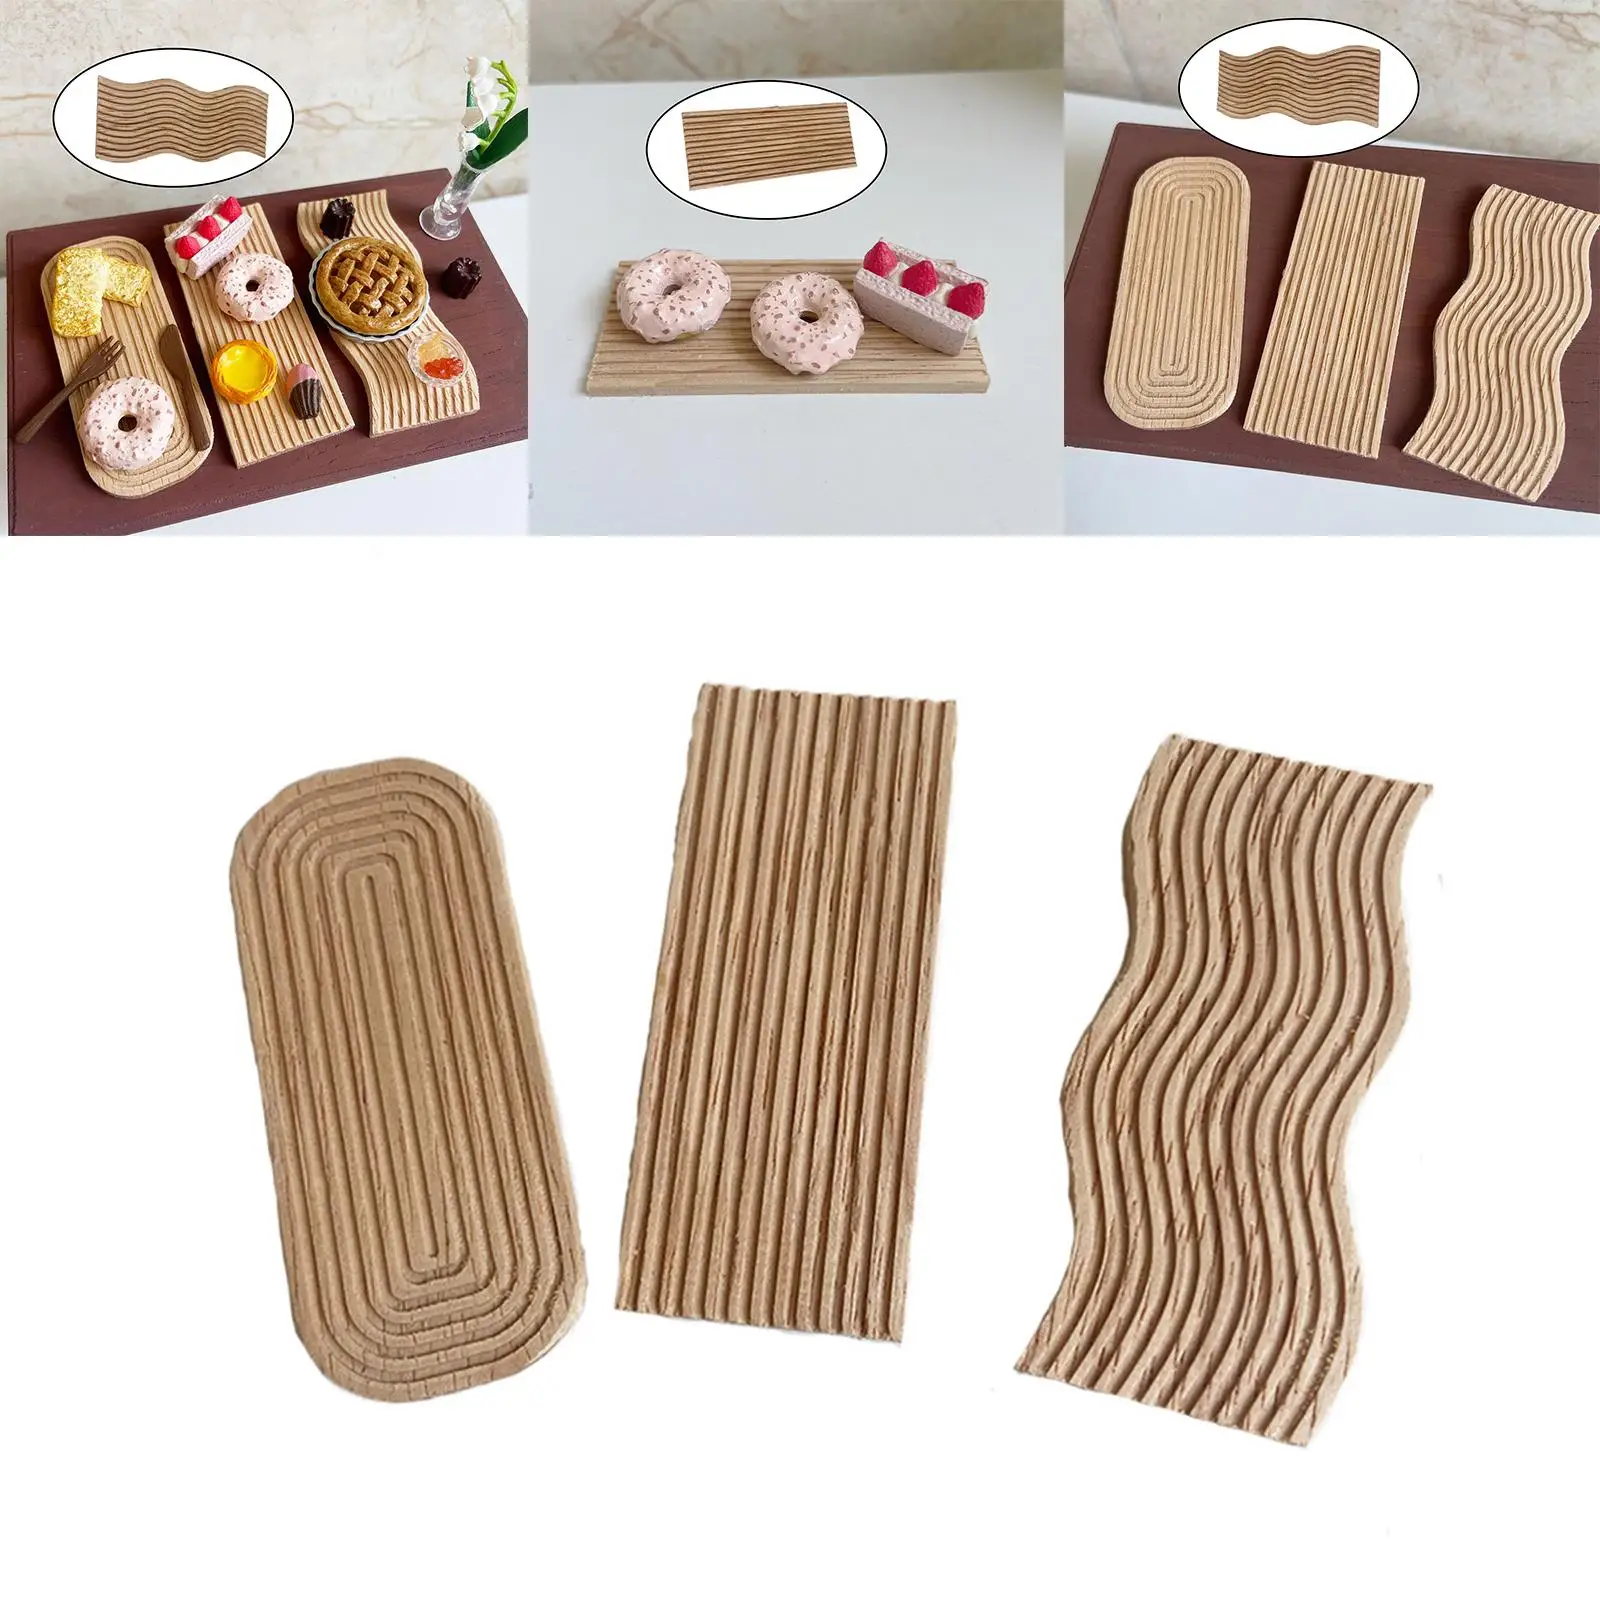 1:8 Dollhouse Mini Wooden Tray Serving Tray Supply Baking Tray for Breakfast